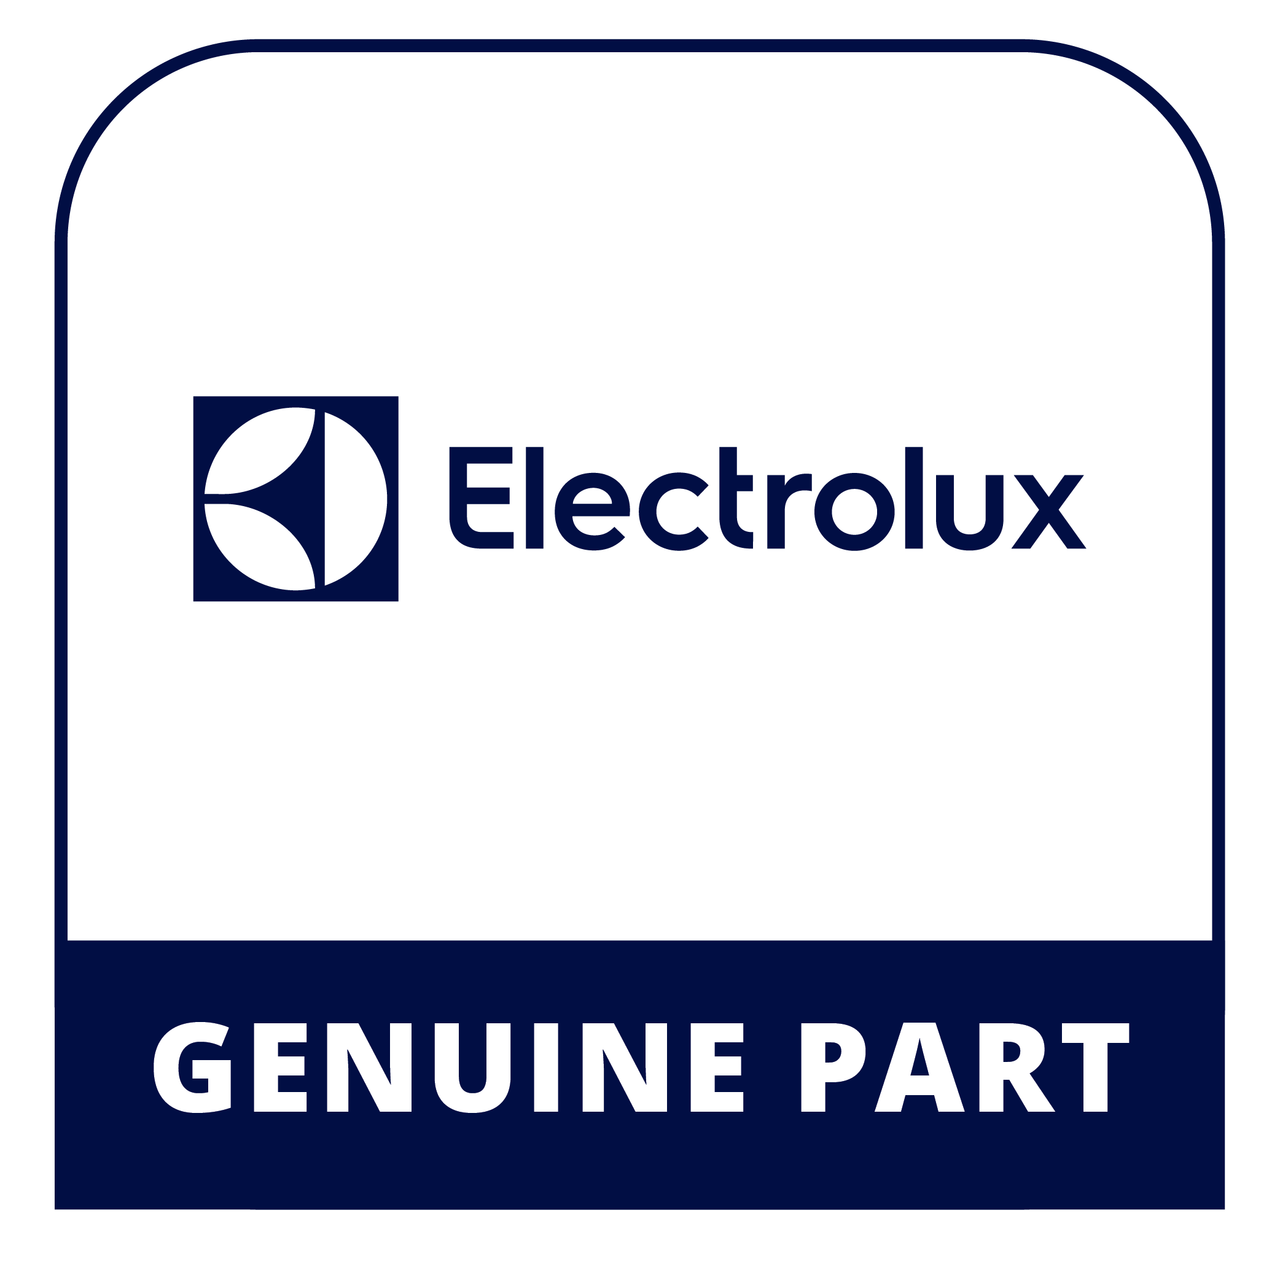 Frigidaire - Electrolux 5304502130 Bracket - Genuine Electrolux Part